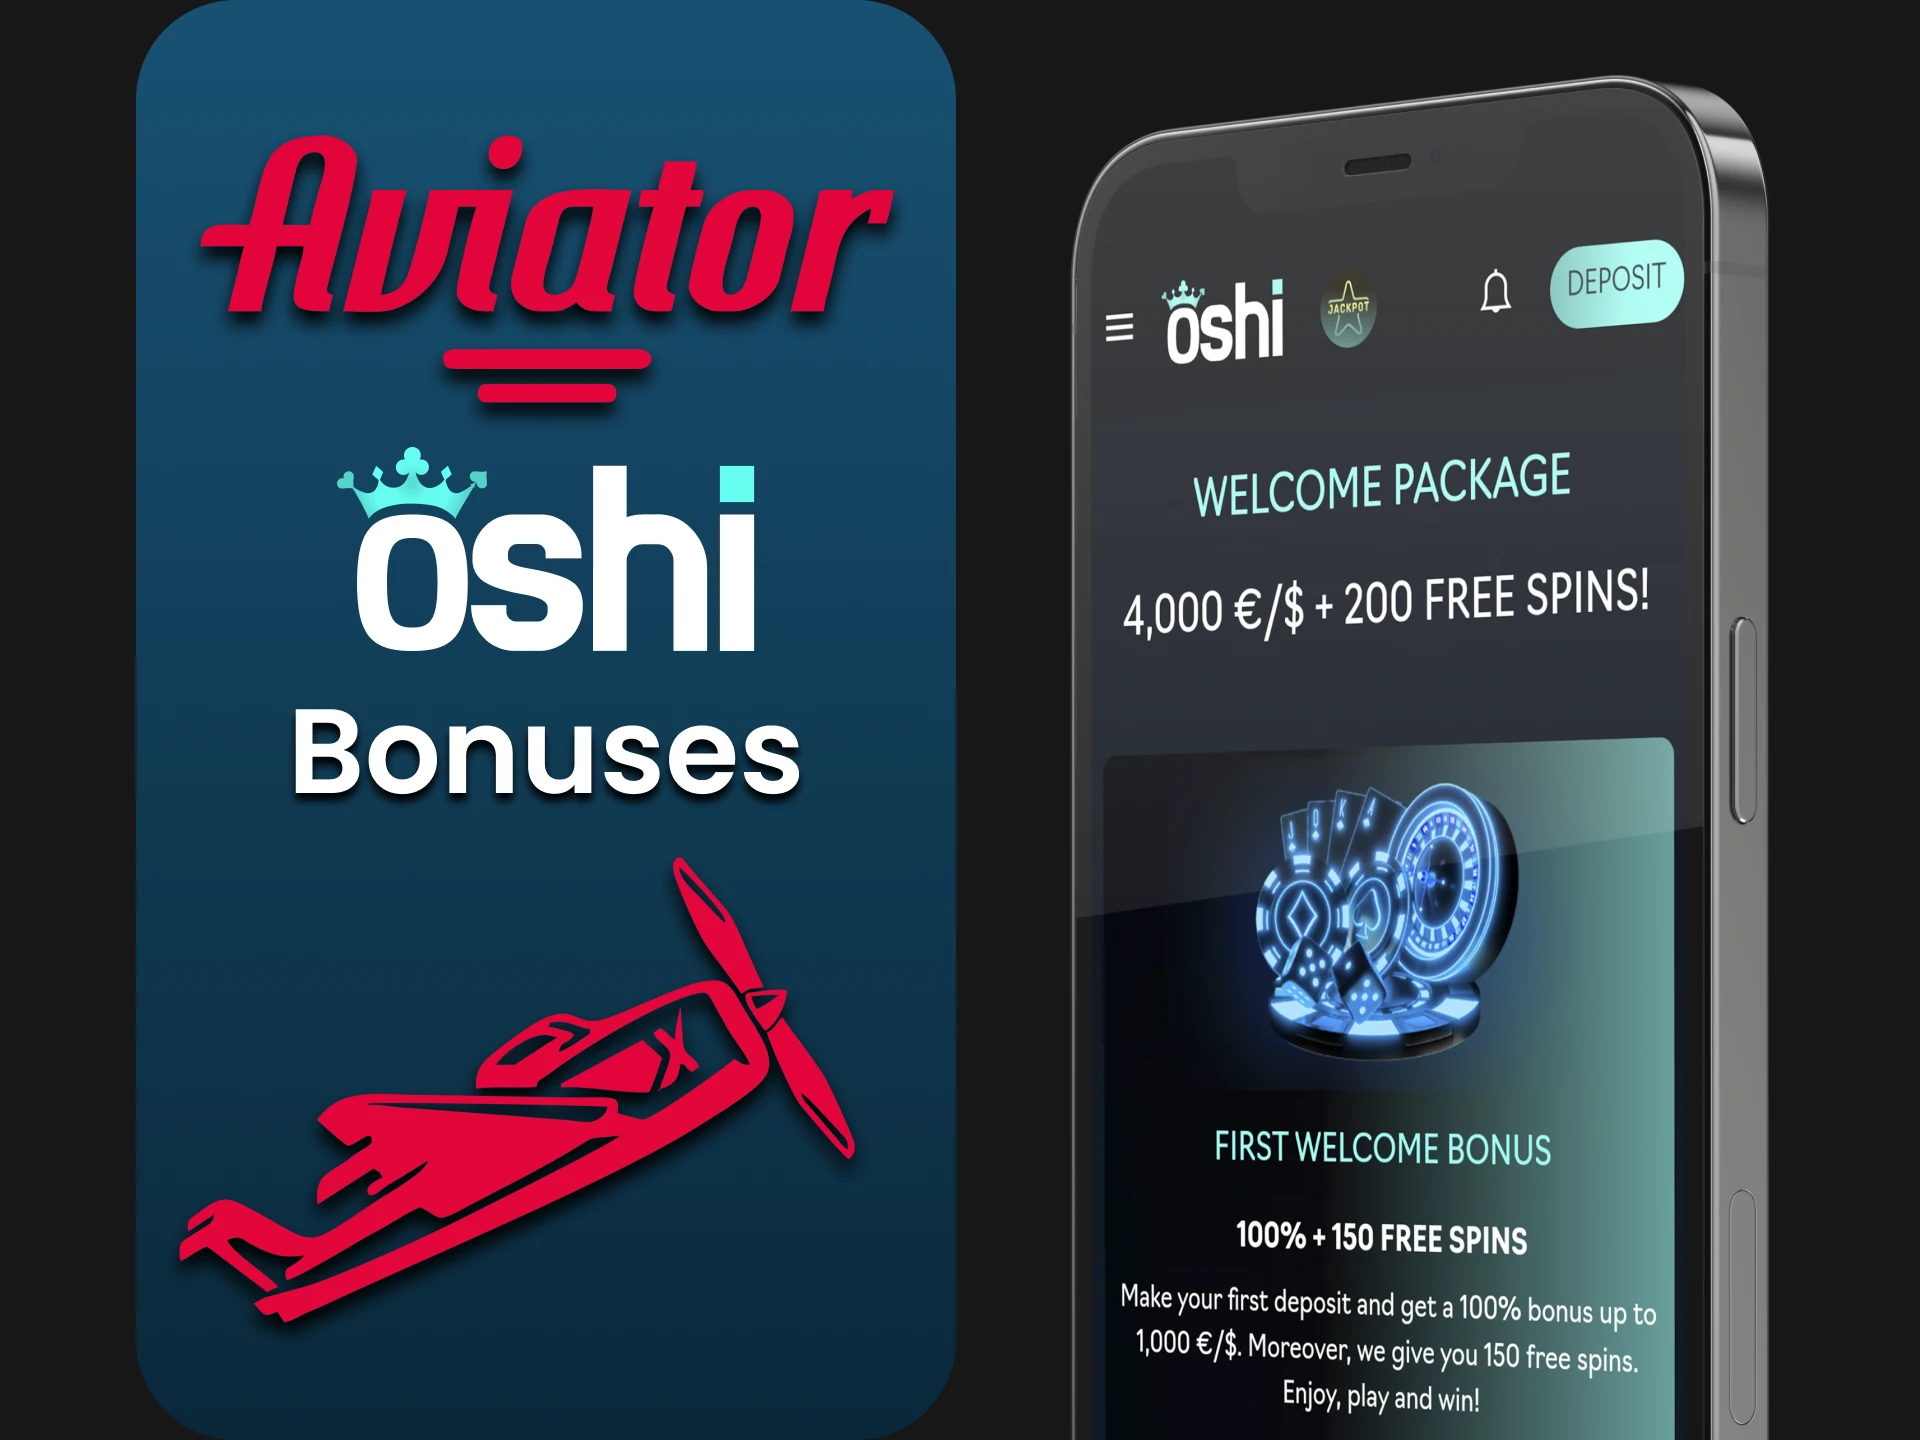 The Oshi Casino app gives bonuses for the Aviator.